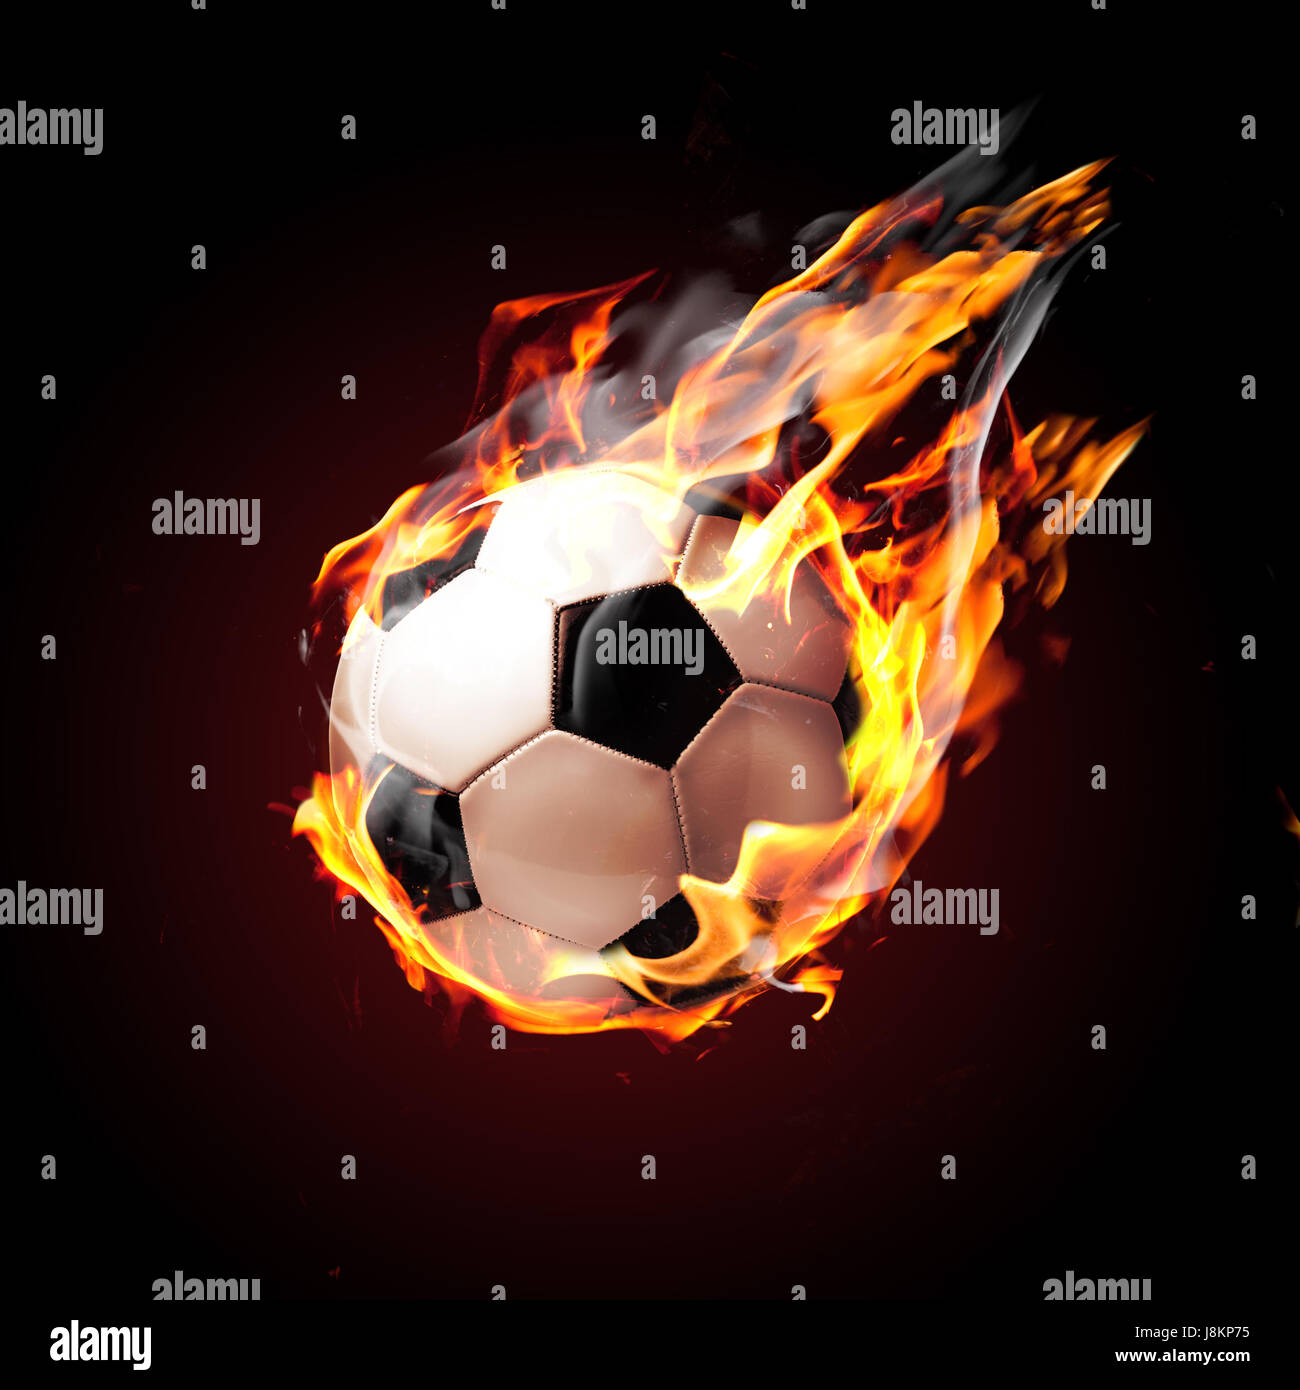 Soccer ball on fire Stock Photo